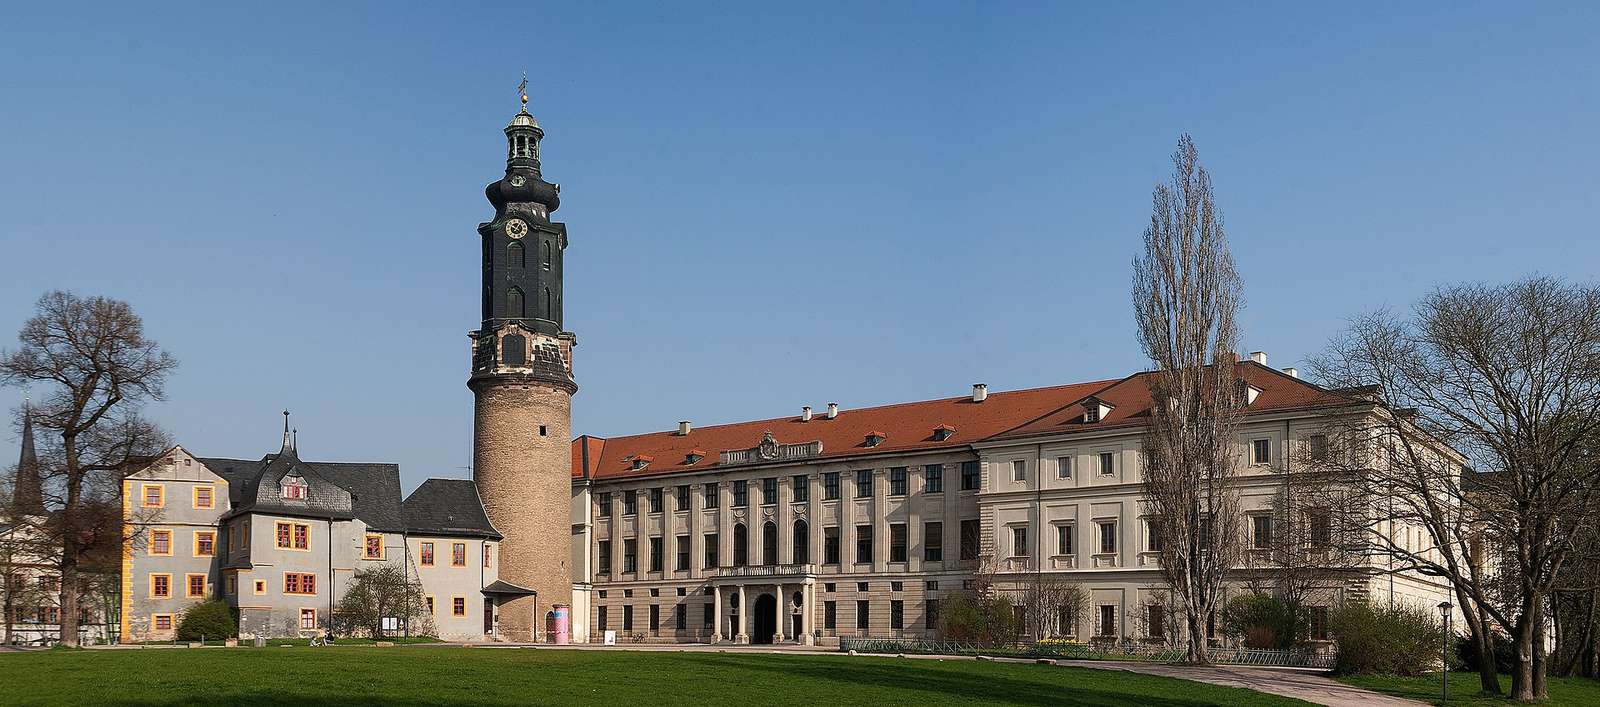 Weimari városi palota online puzzle